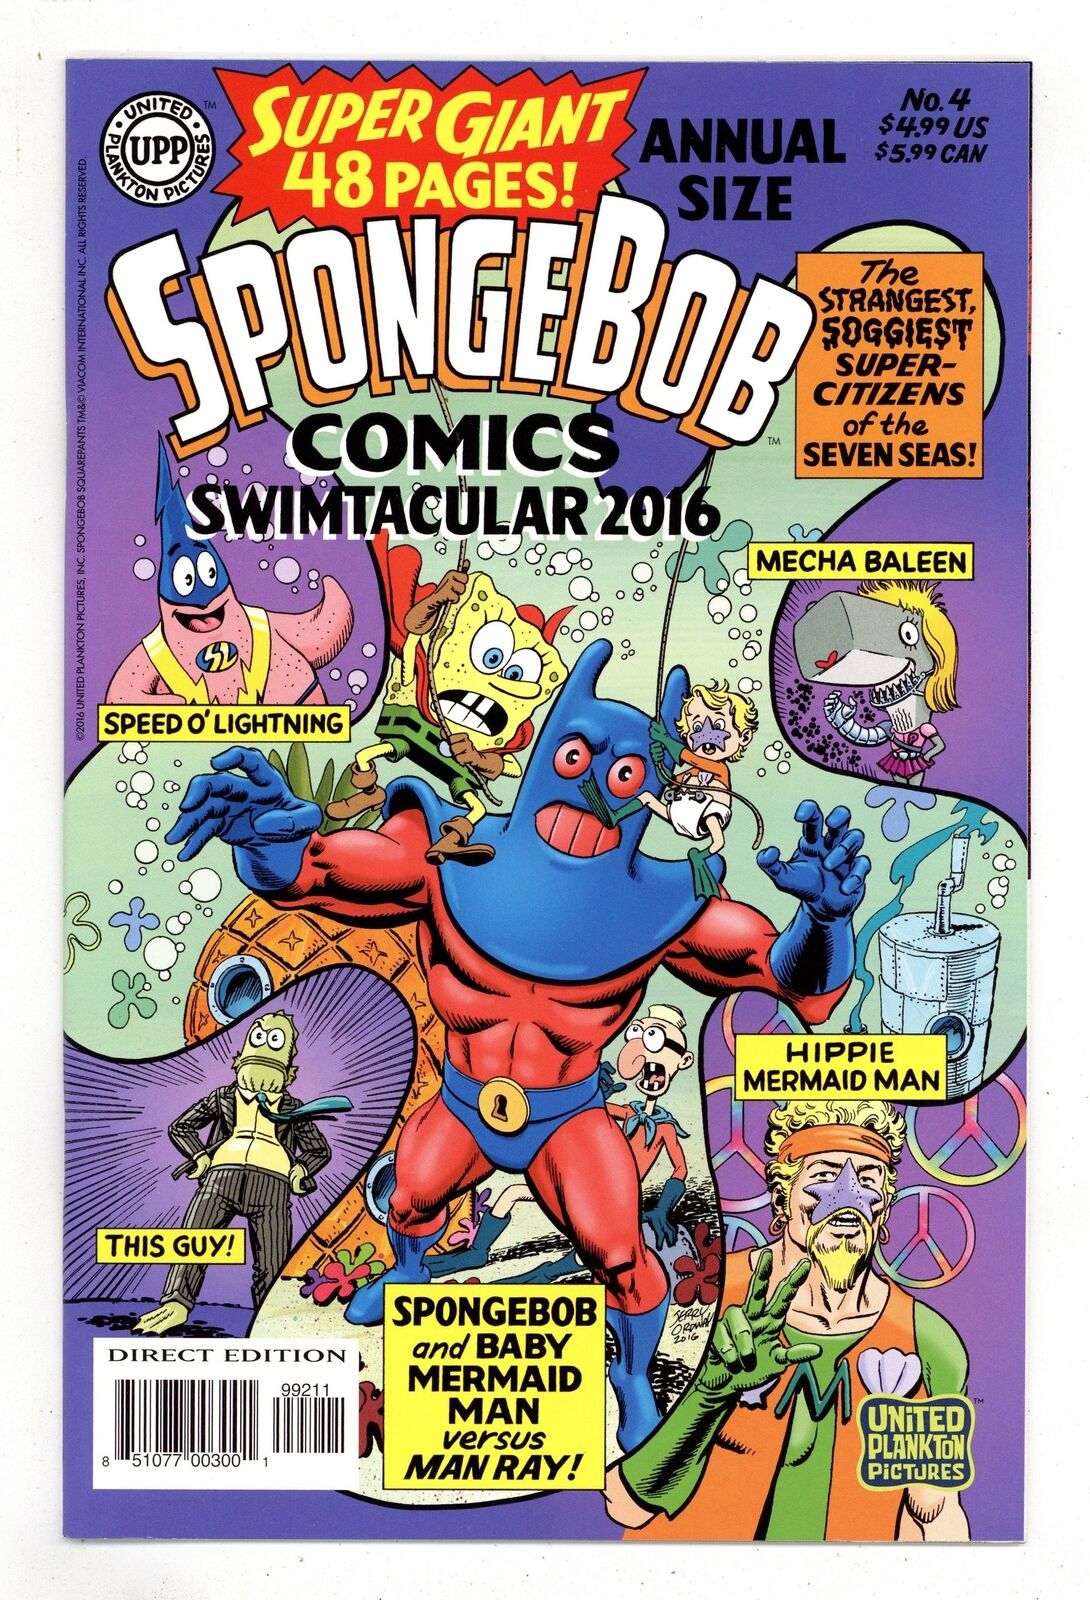 Spongebob Comics Annual Size Super Giant Swimtacular #4 NM 9.4 2016